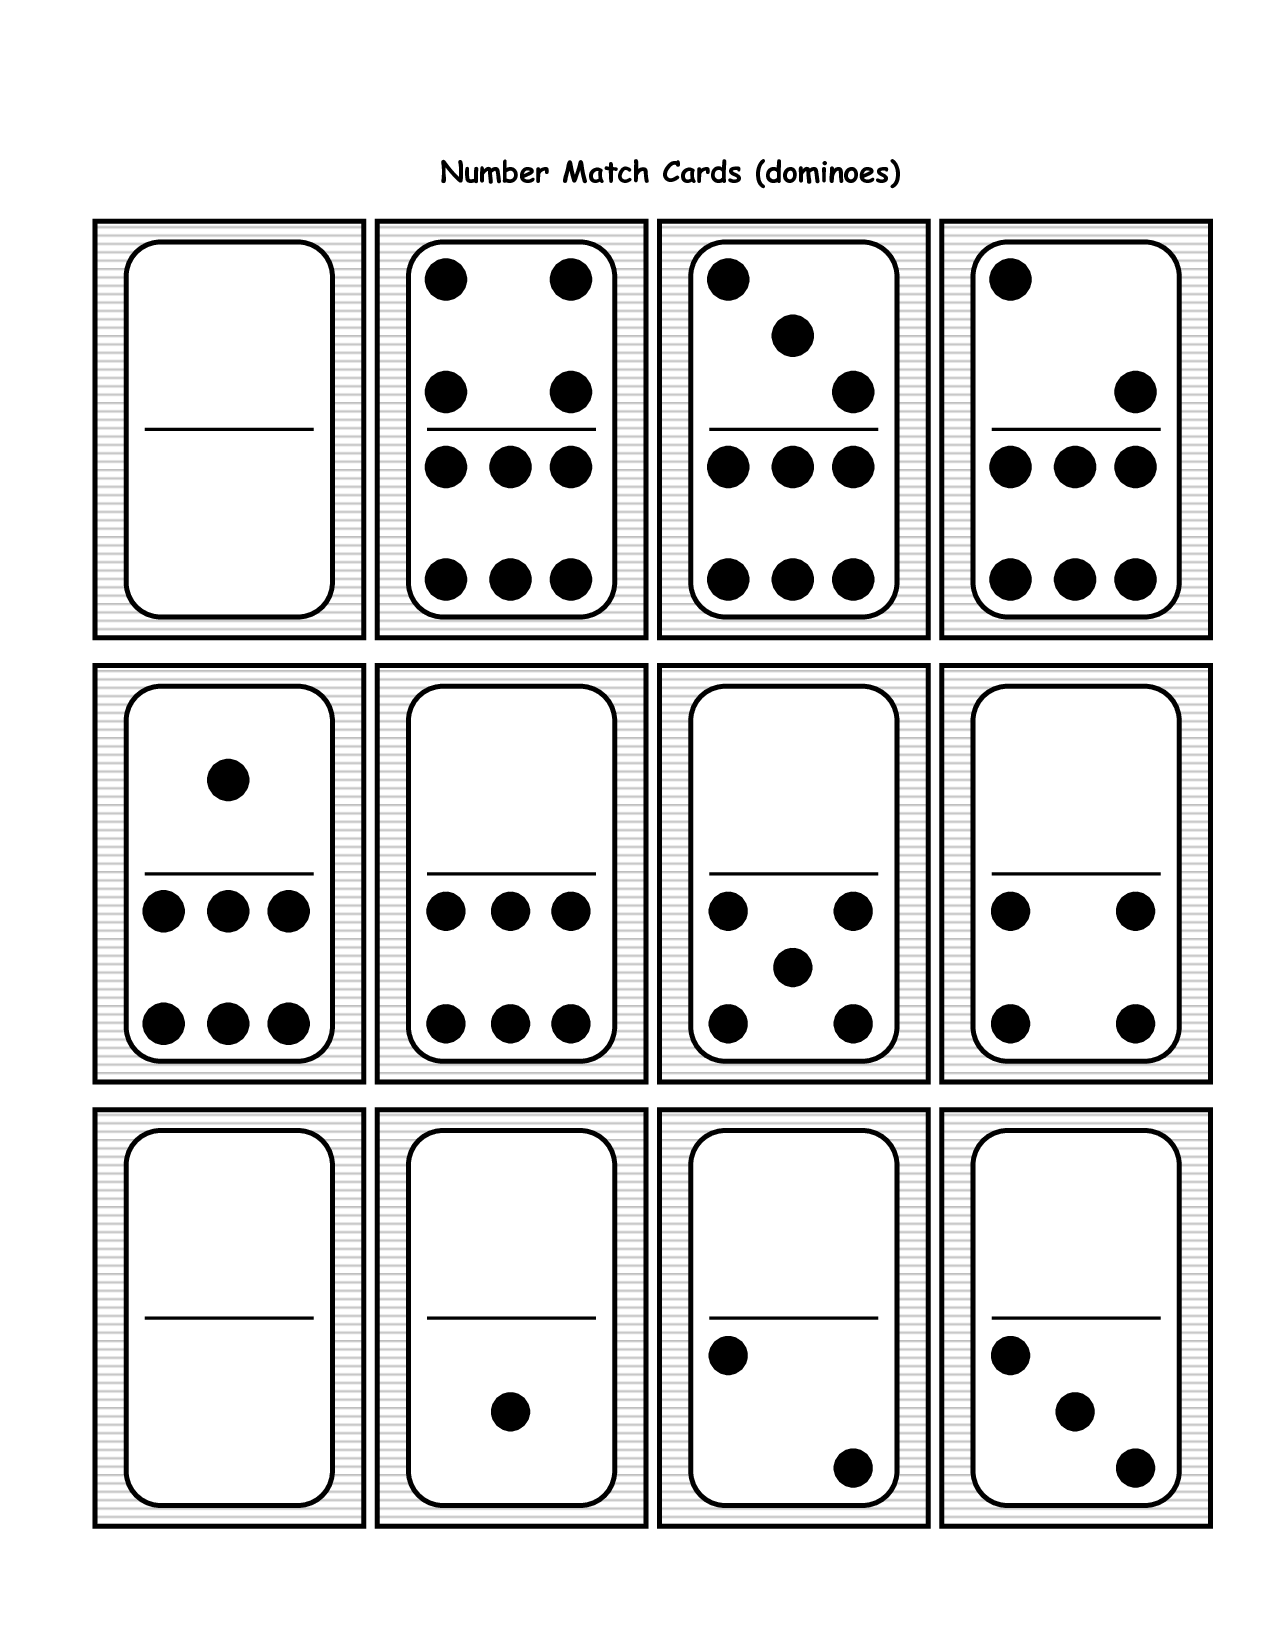 14-best-images-of-domino-multiplication-worksheet-super-teacher-math-worksheets-multiplication